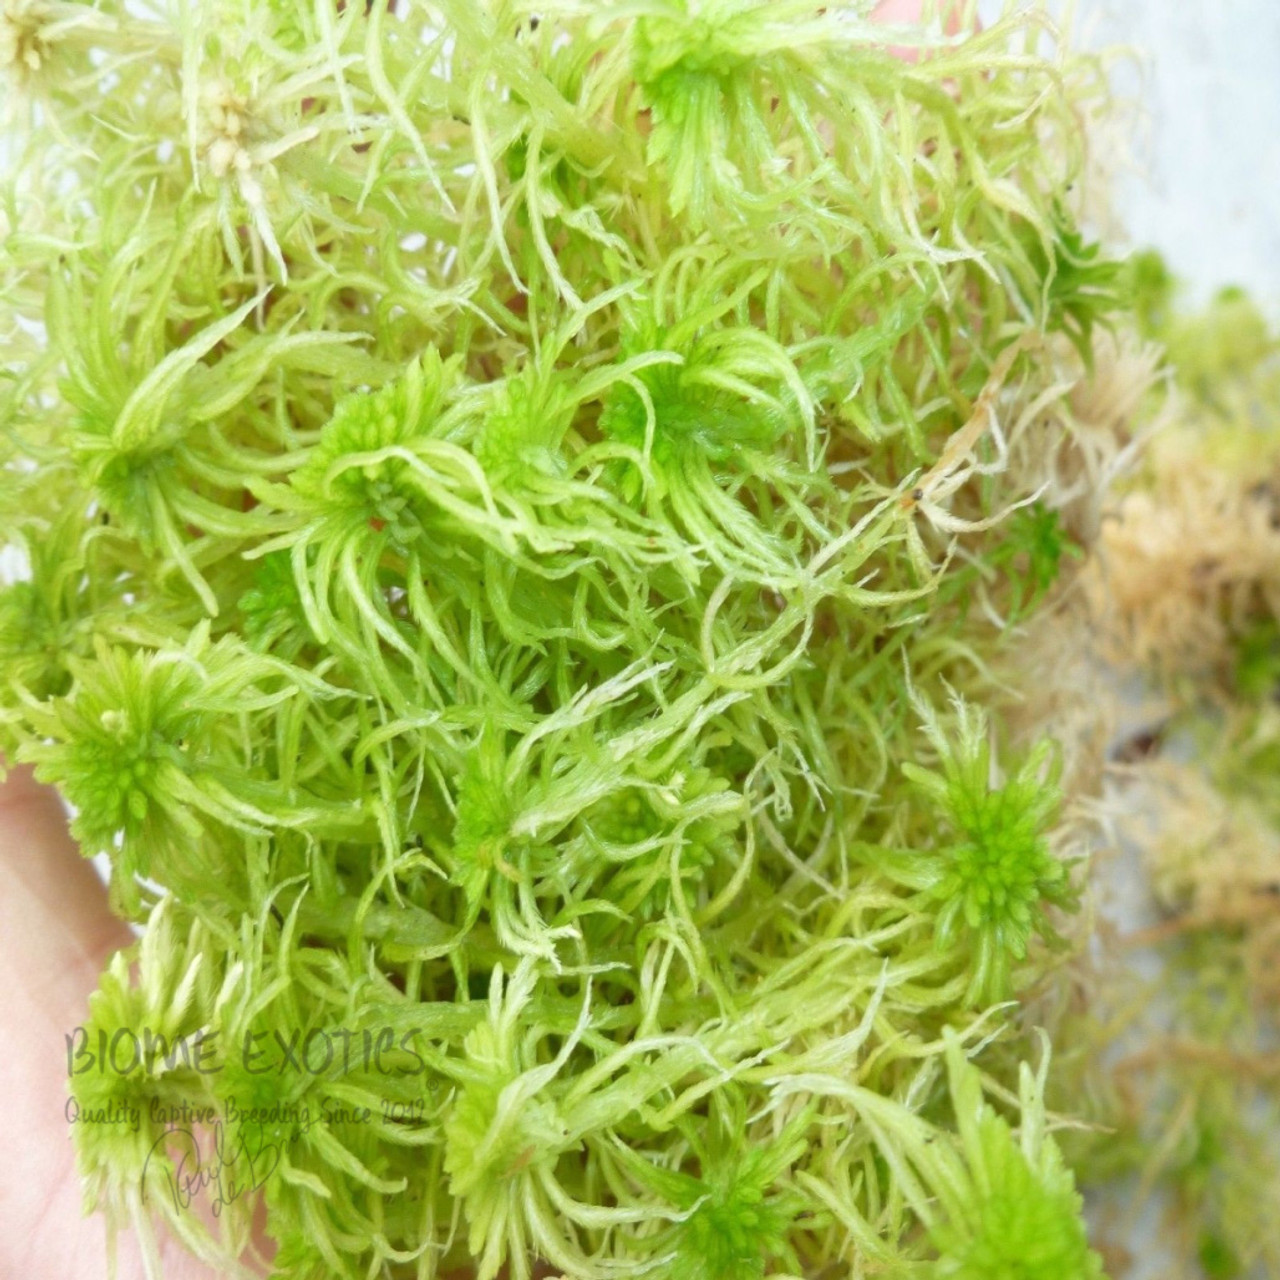 New Zealand Sphagnum Moss - CLASSIC (500g, 40L)